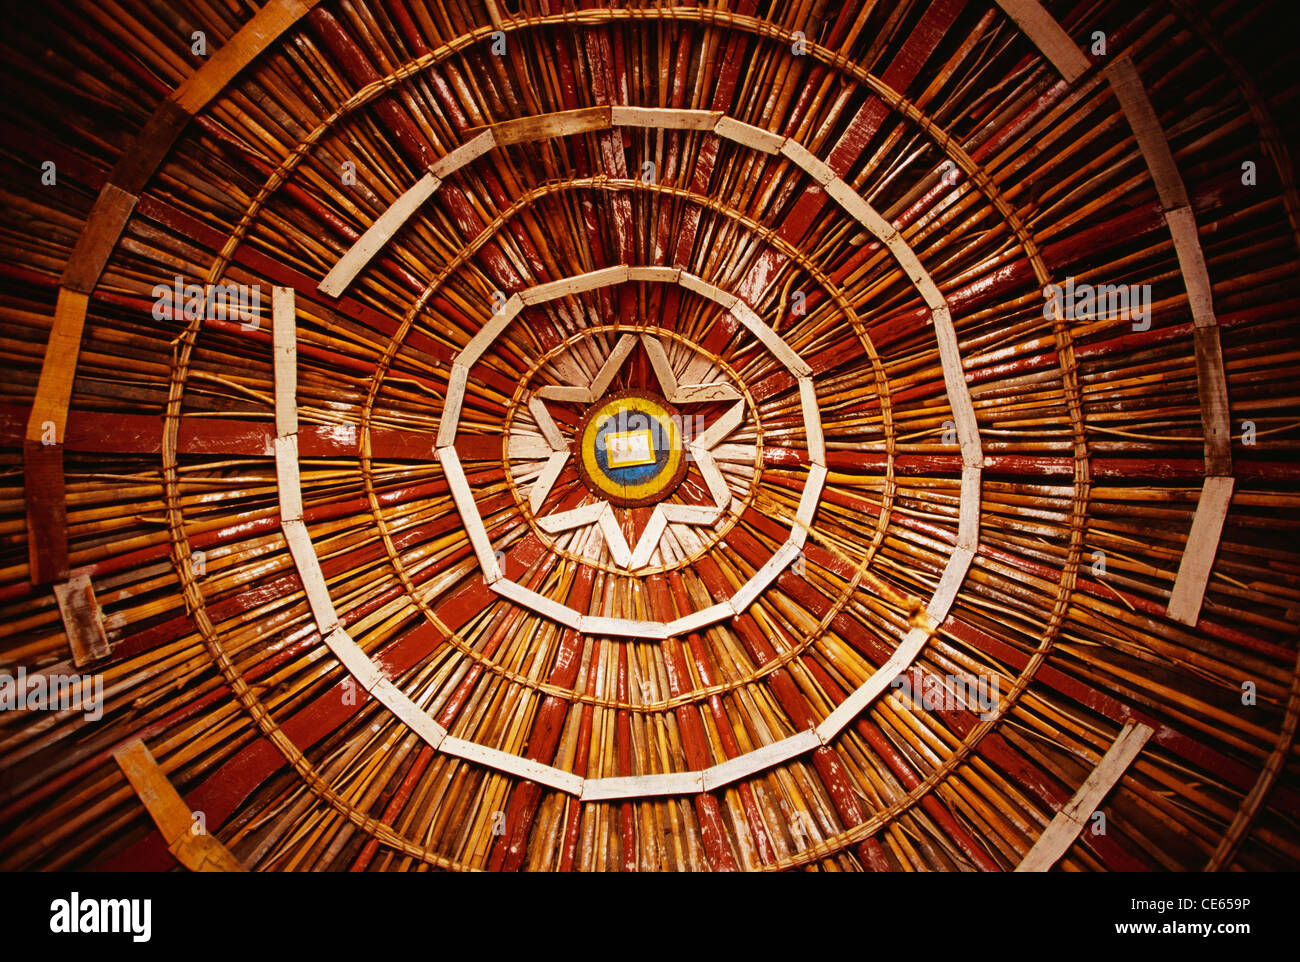 Bamboo handmade ceiling design concentric circles ; India ; Asia Stock Photo